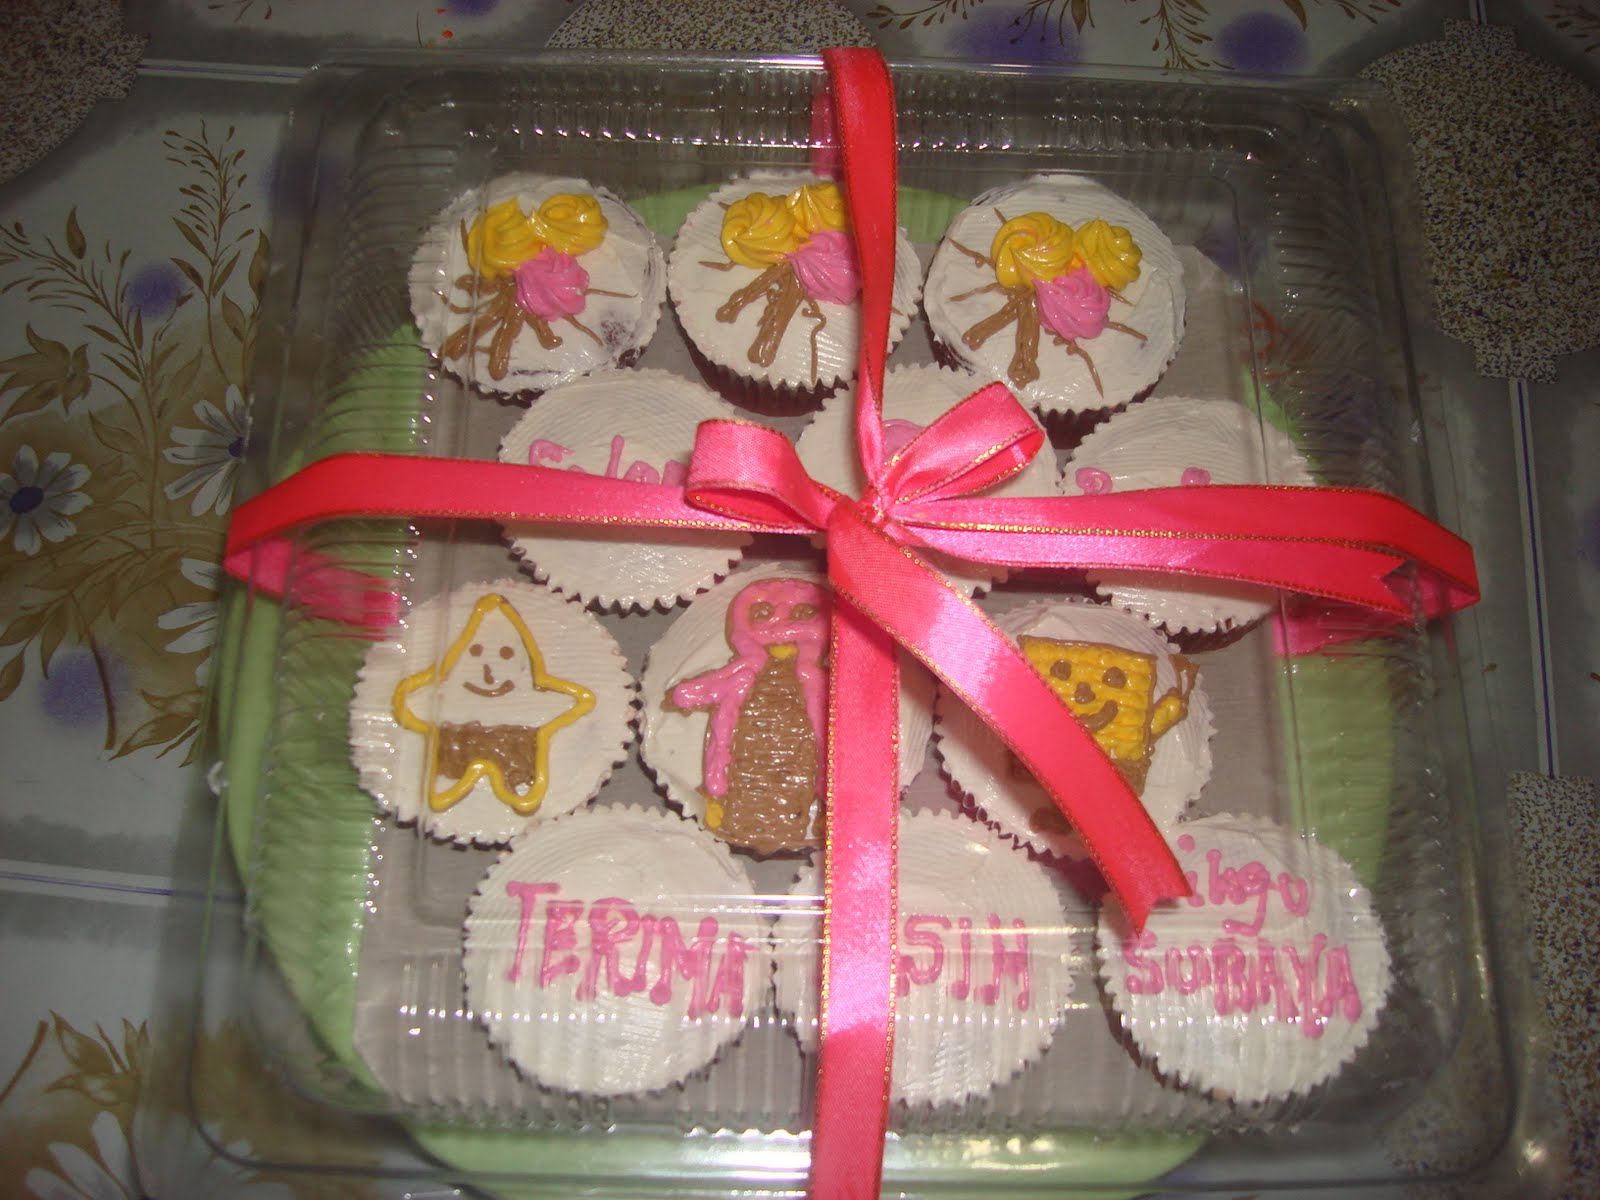 Sabasofian simplecakes: red velvet cupcakes